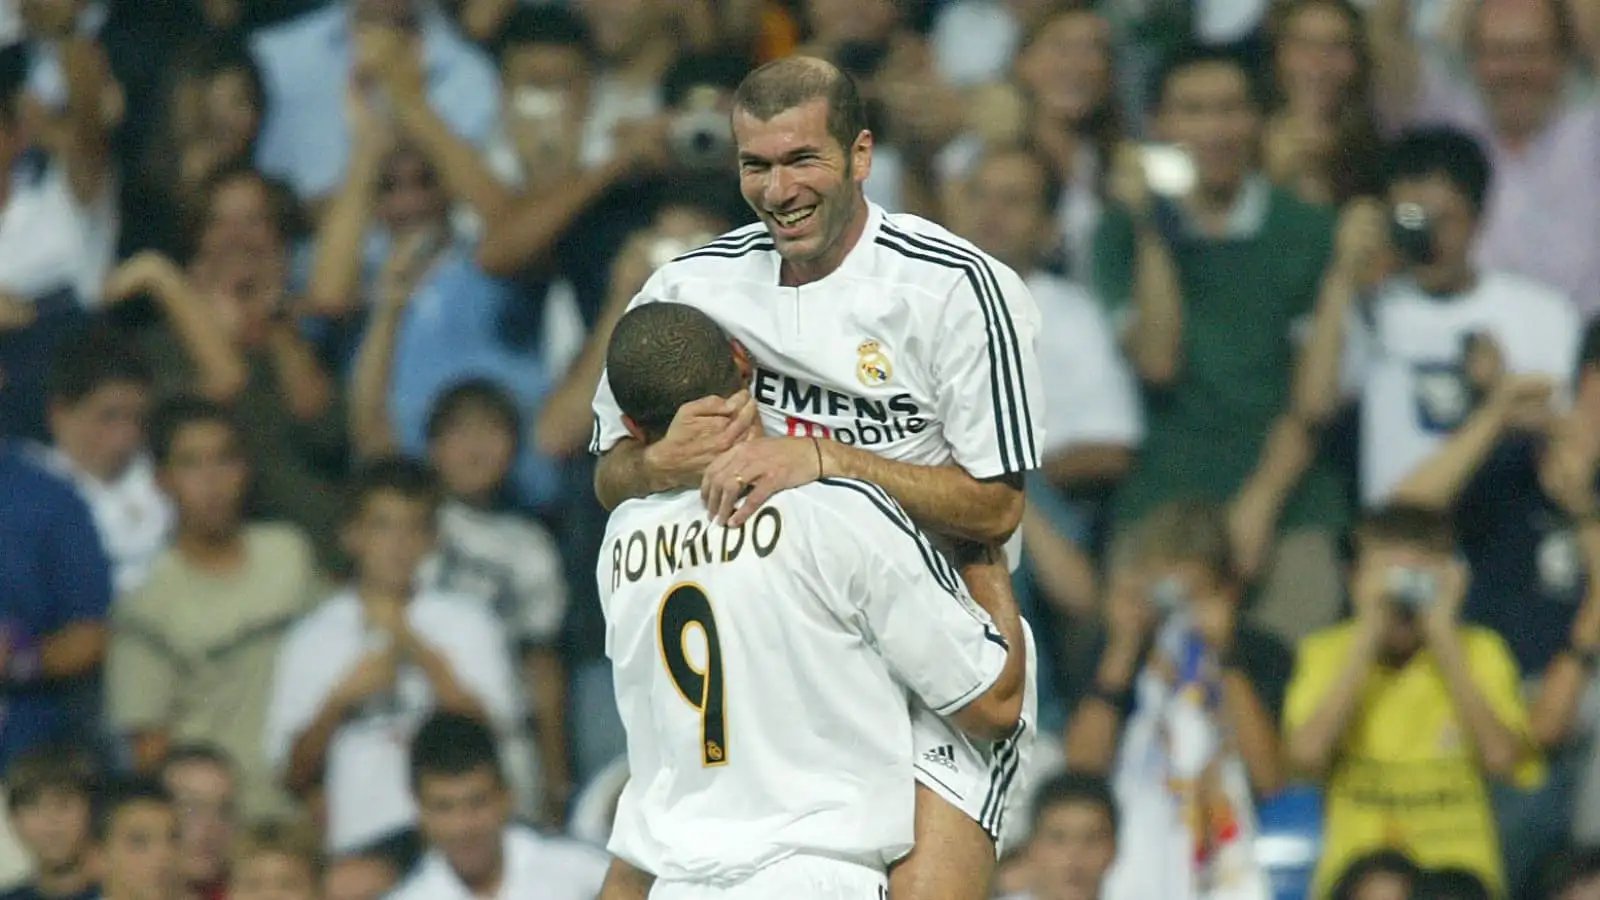 Former Real Madrid stars Zinedine Zidane and Ronaldo